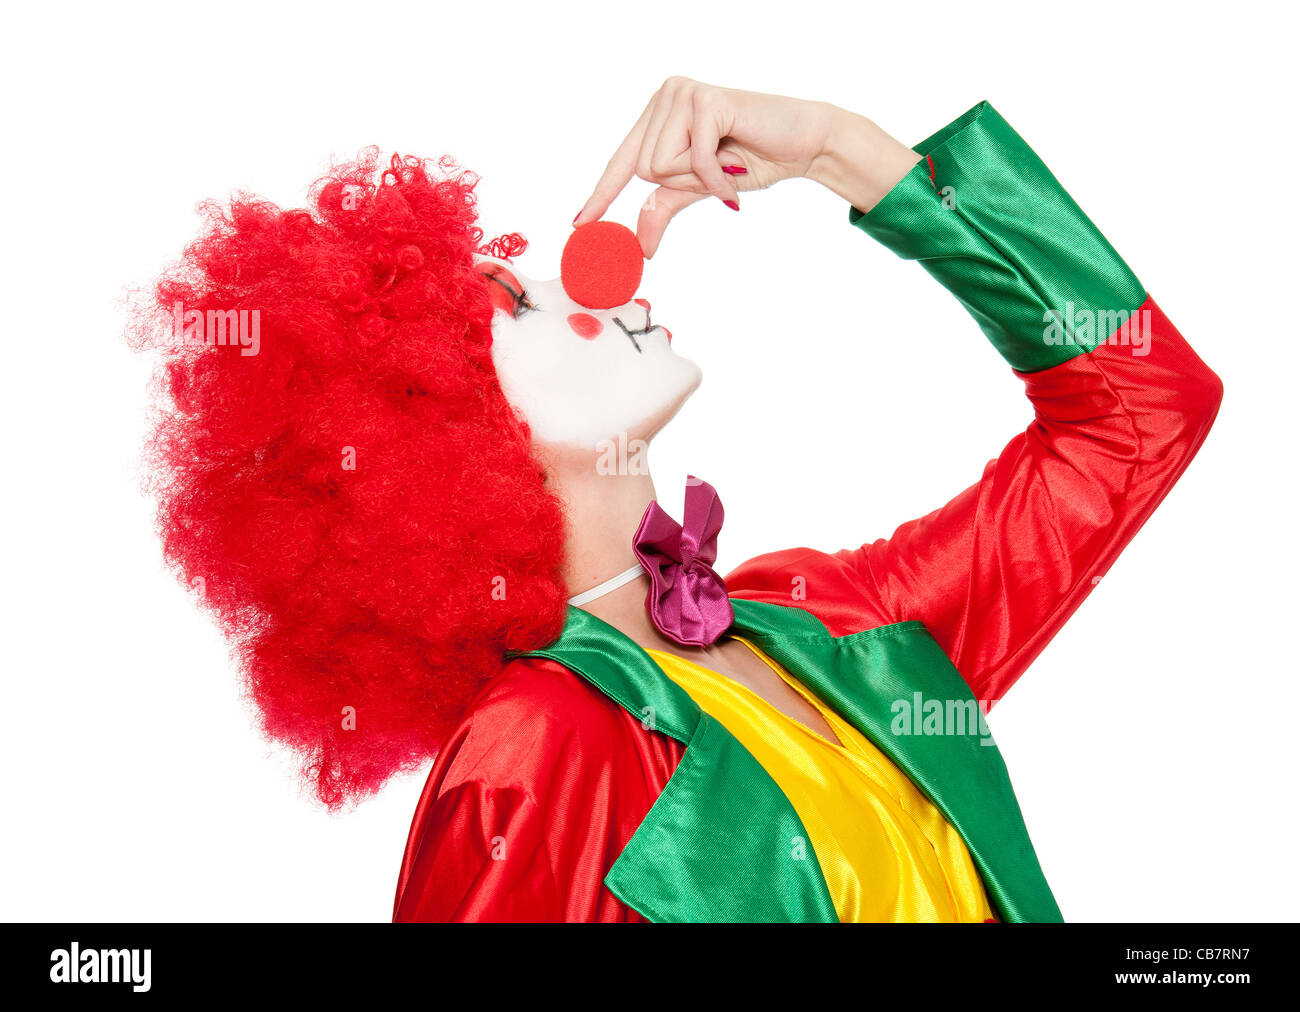 funny clown Stock Photo